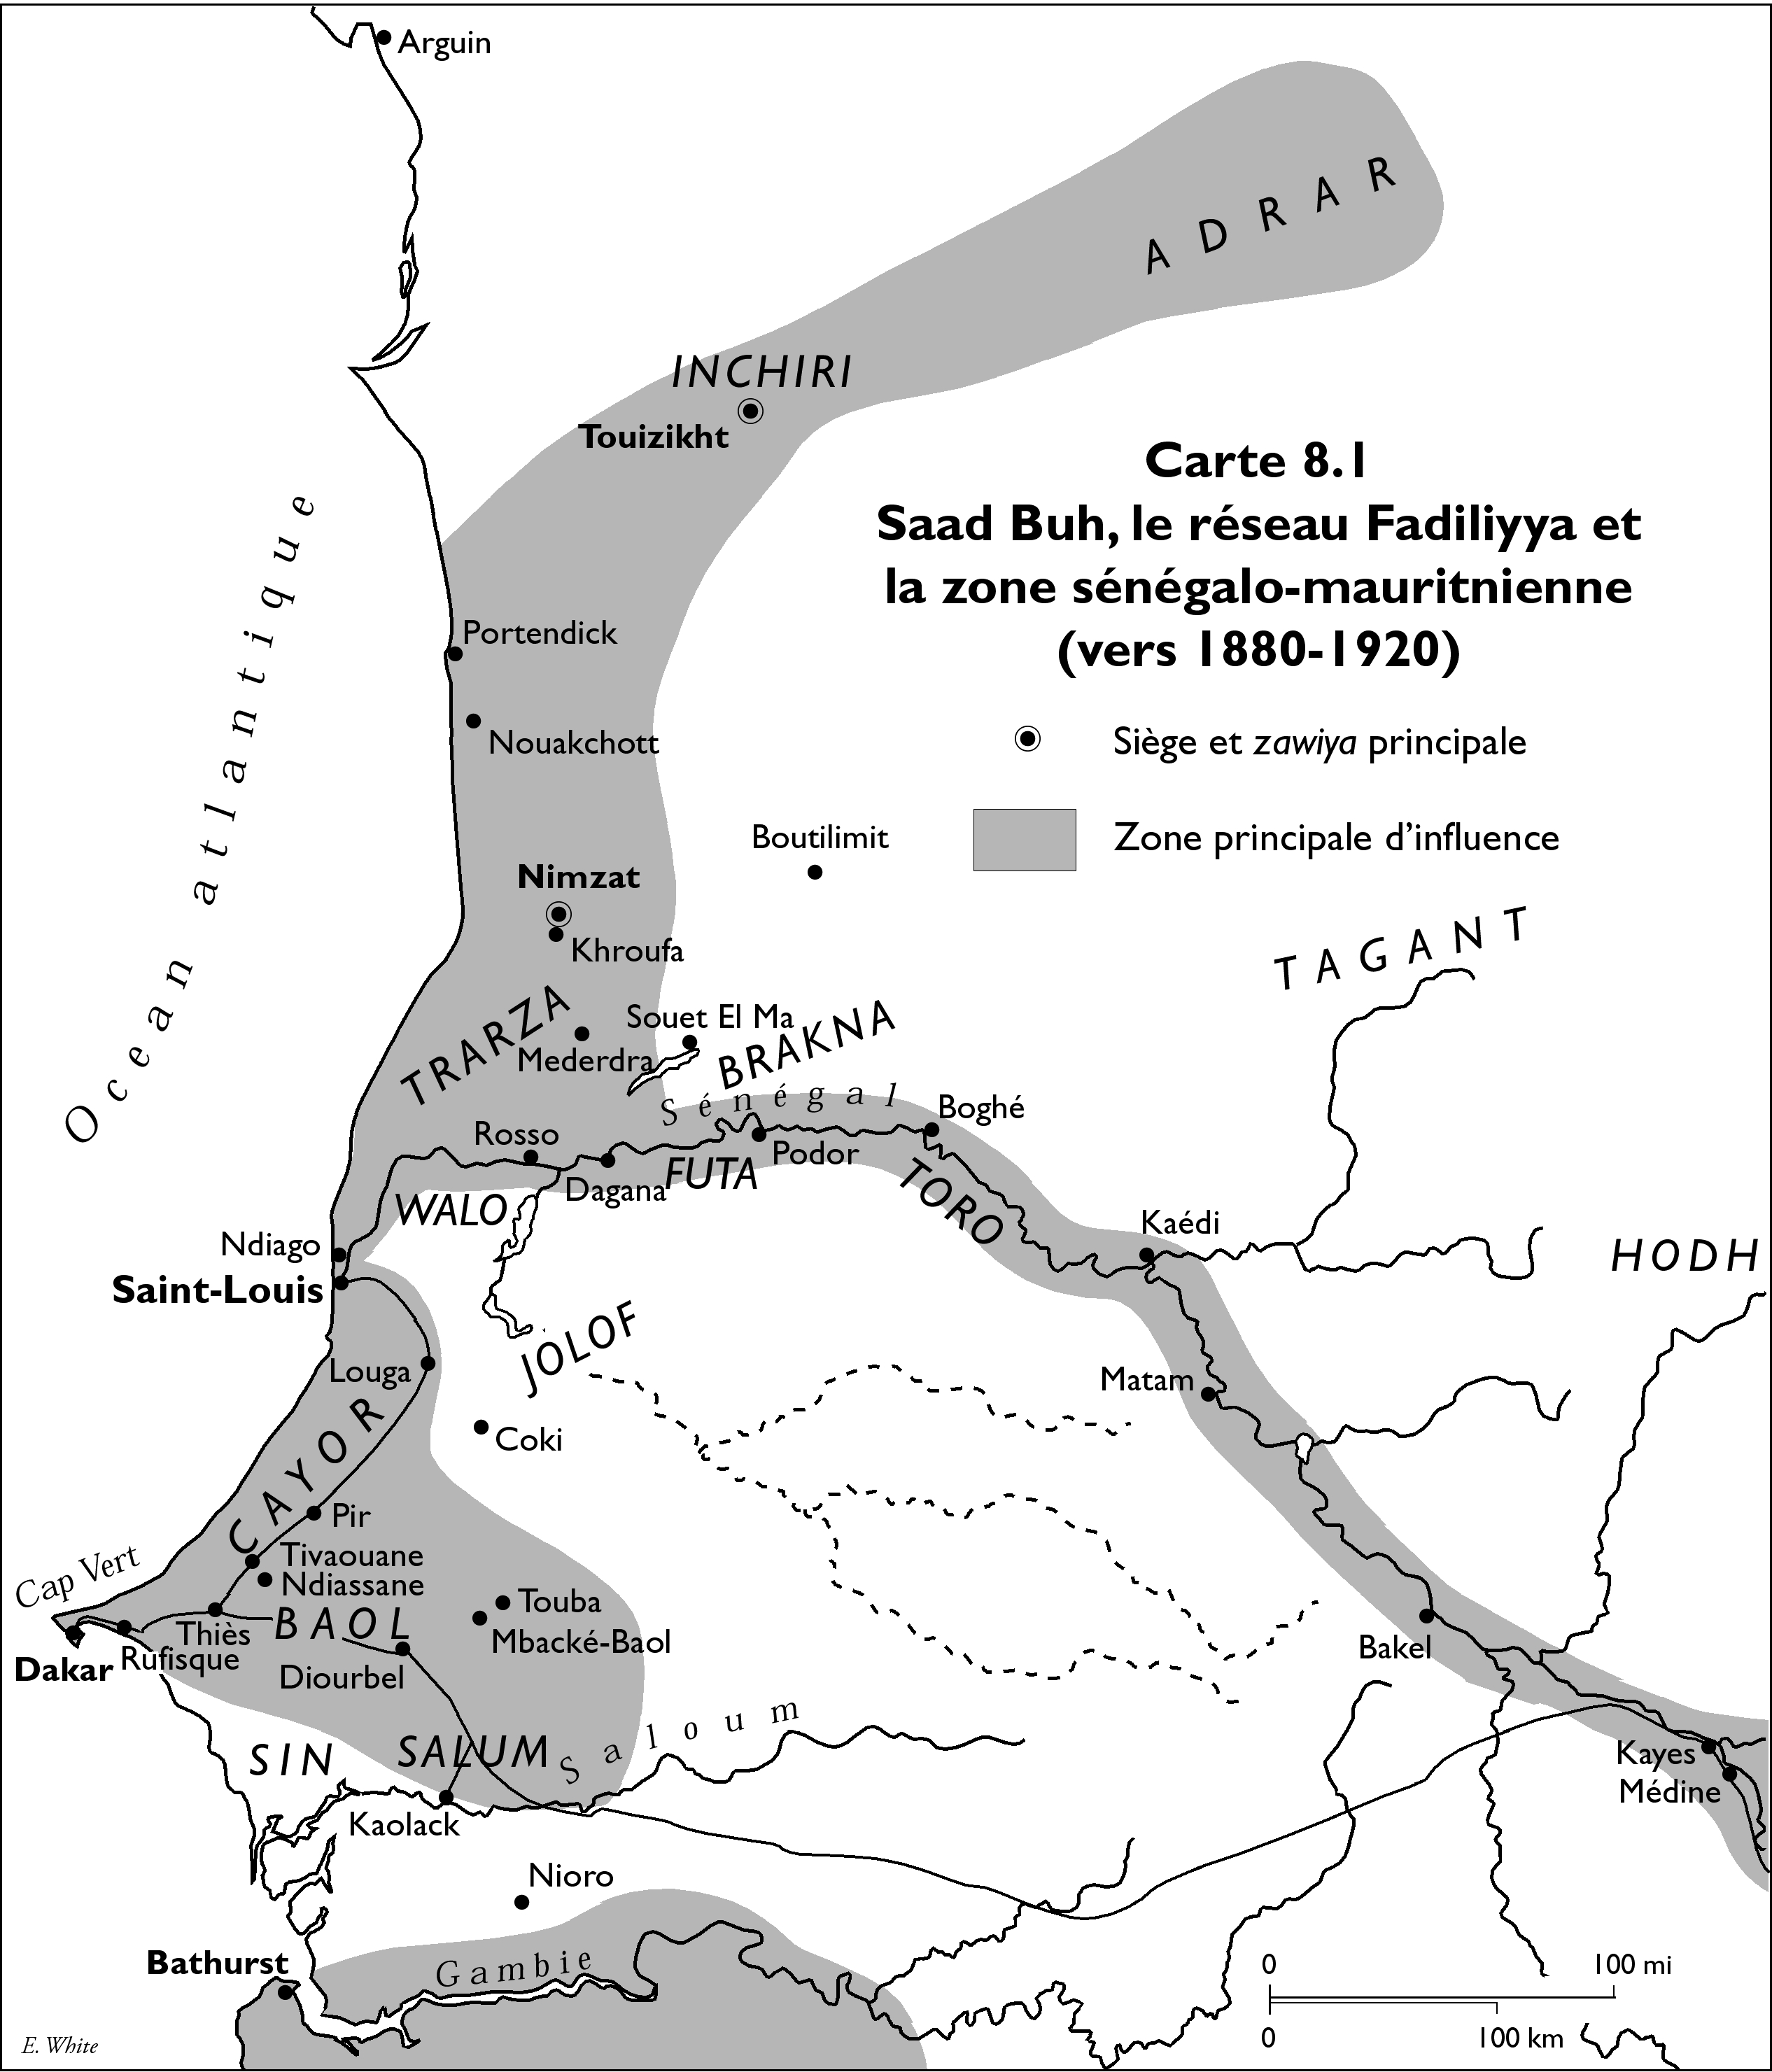 Saad Buh, the Fadiliyya Network and the Senegalo-Mauritanian Zone (circa 1880-1920)